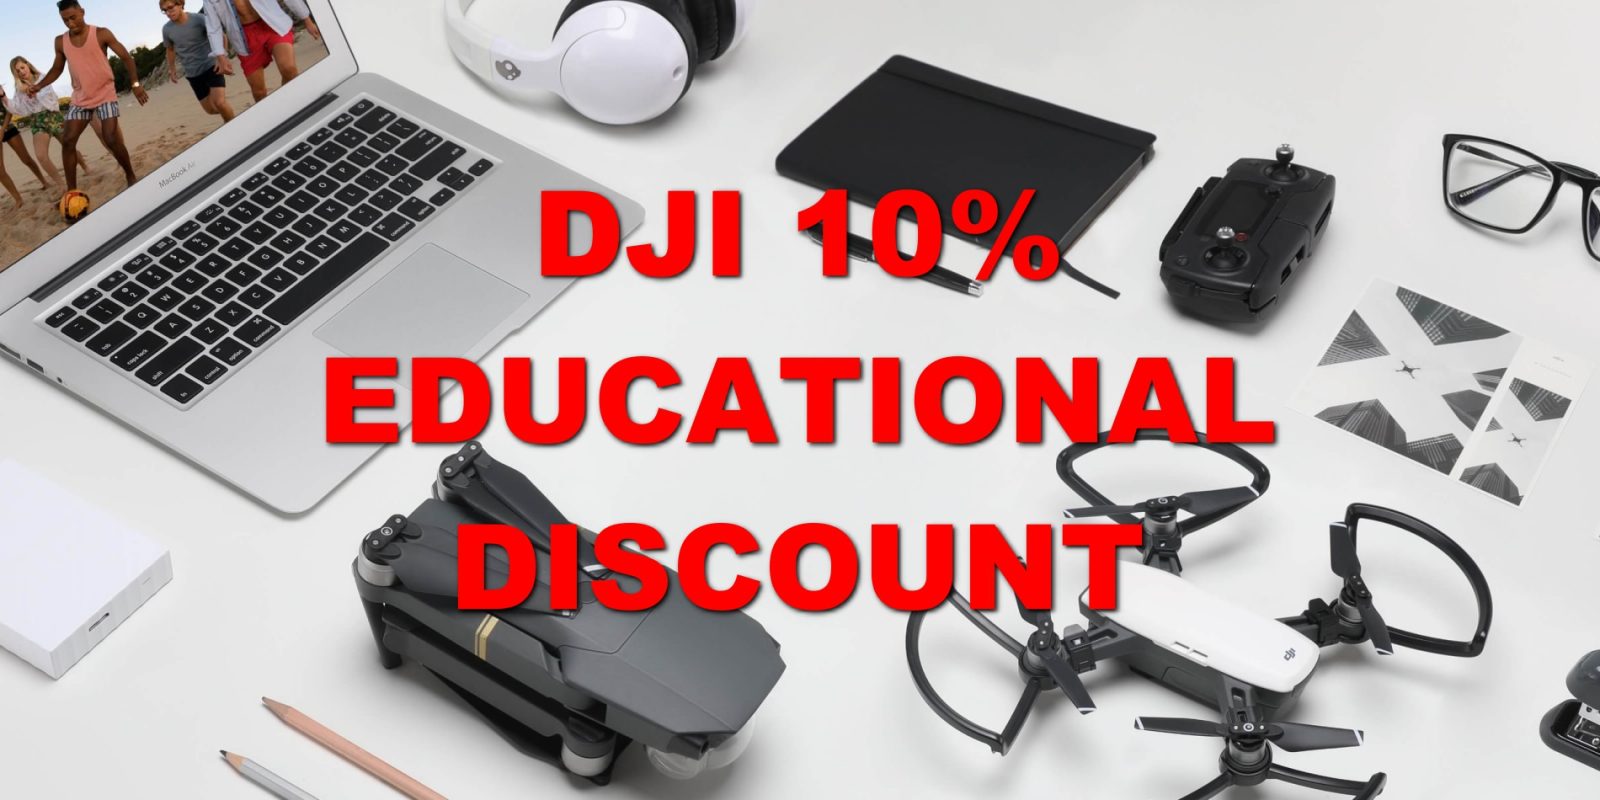 DJI 10% Educational Discount